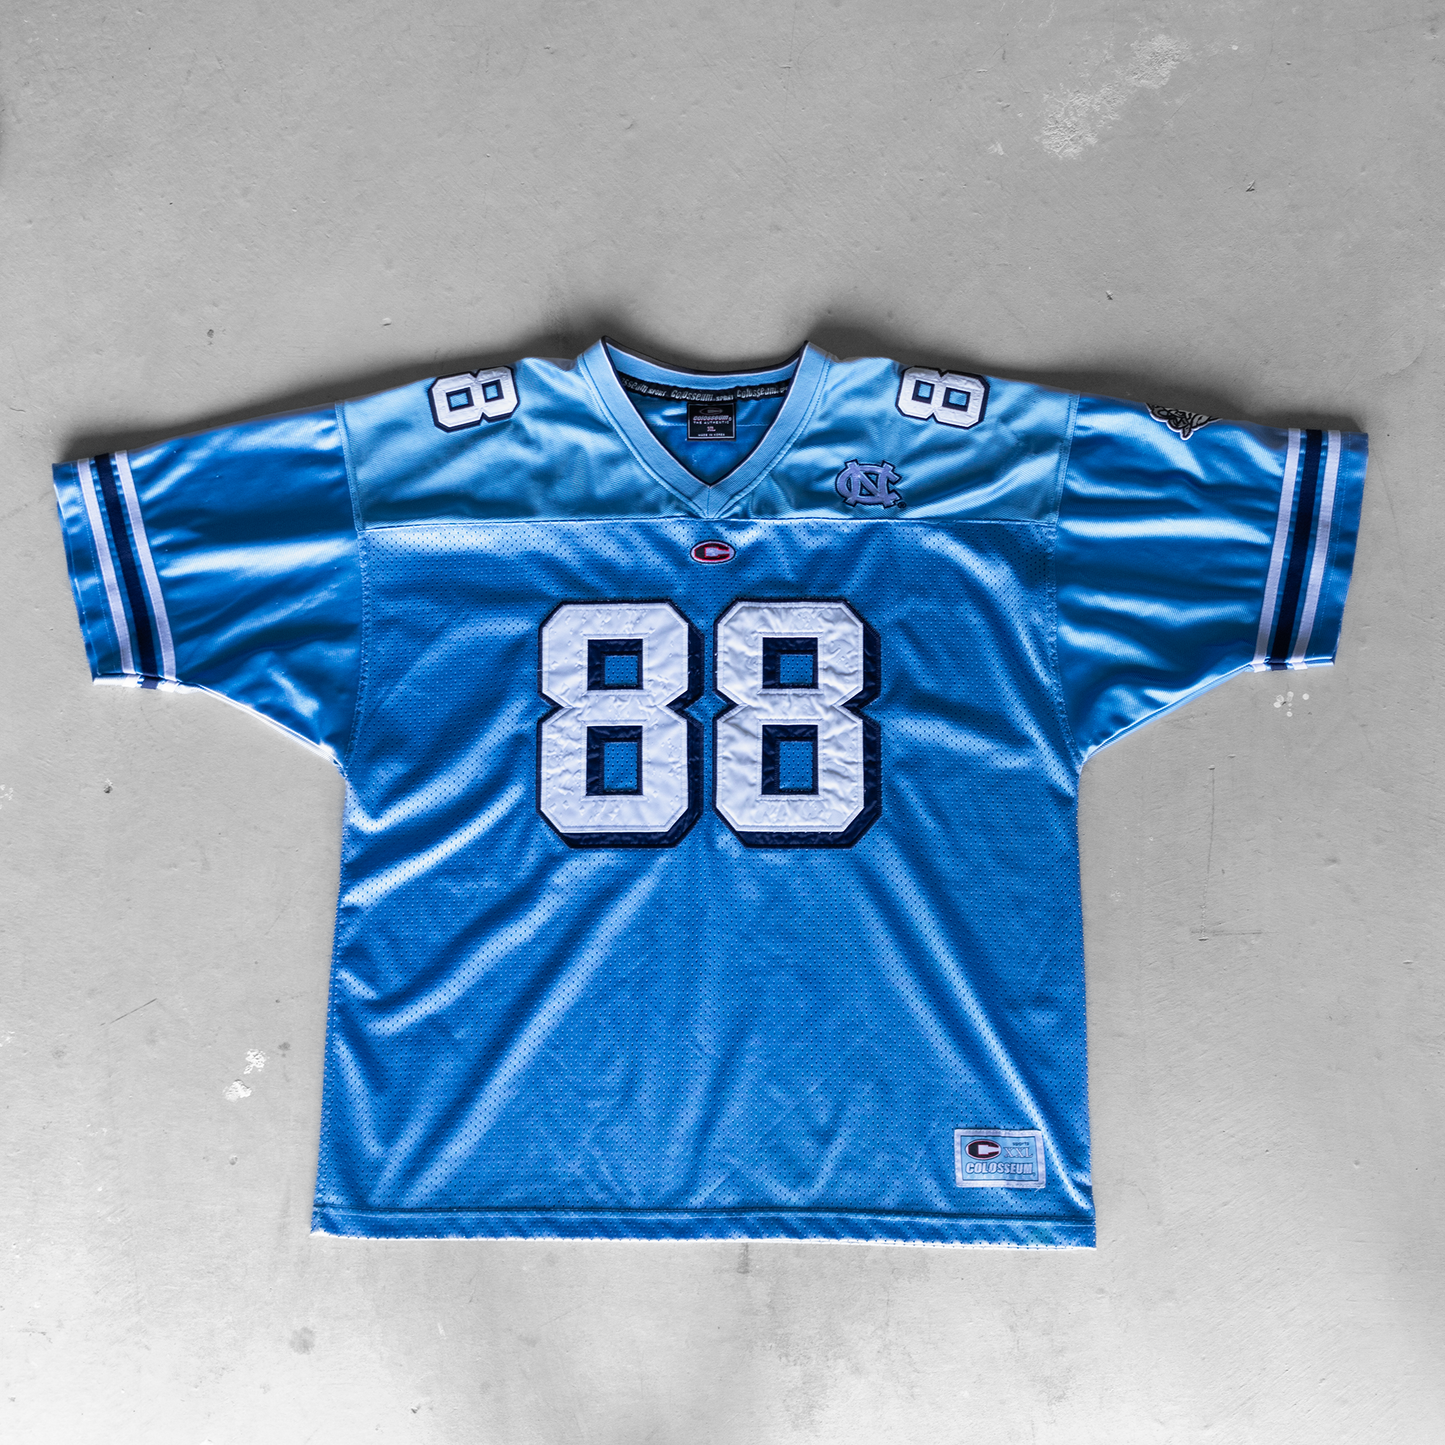 Vintage University Of North Carolina #88 Blue Football Jersey (XL)